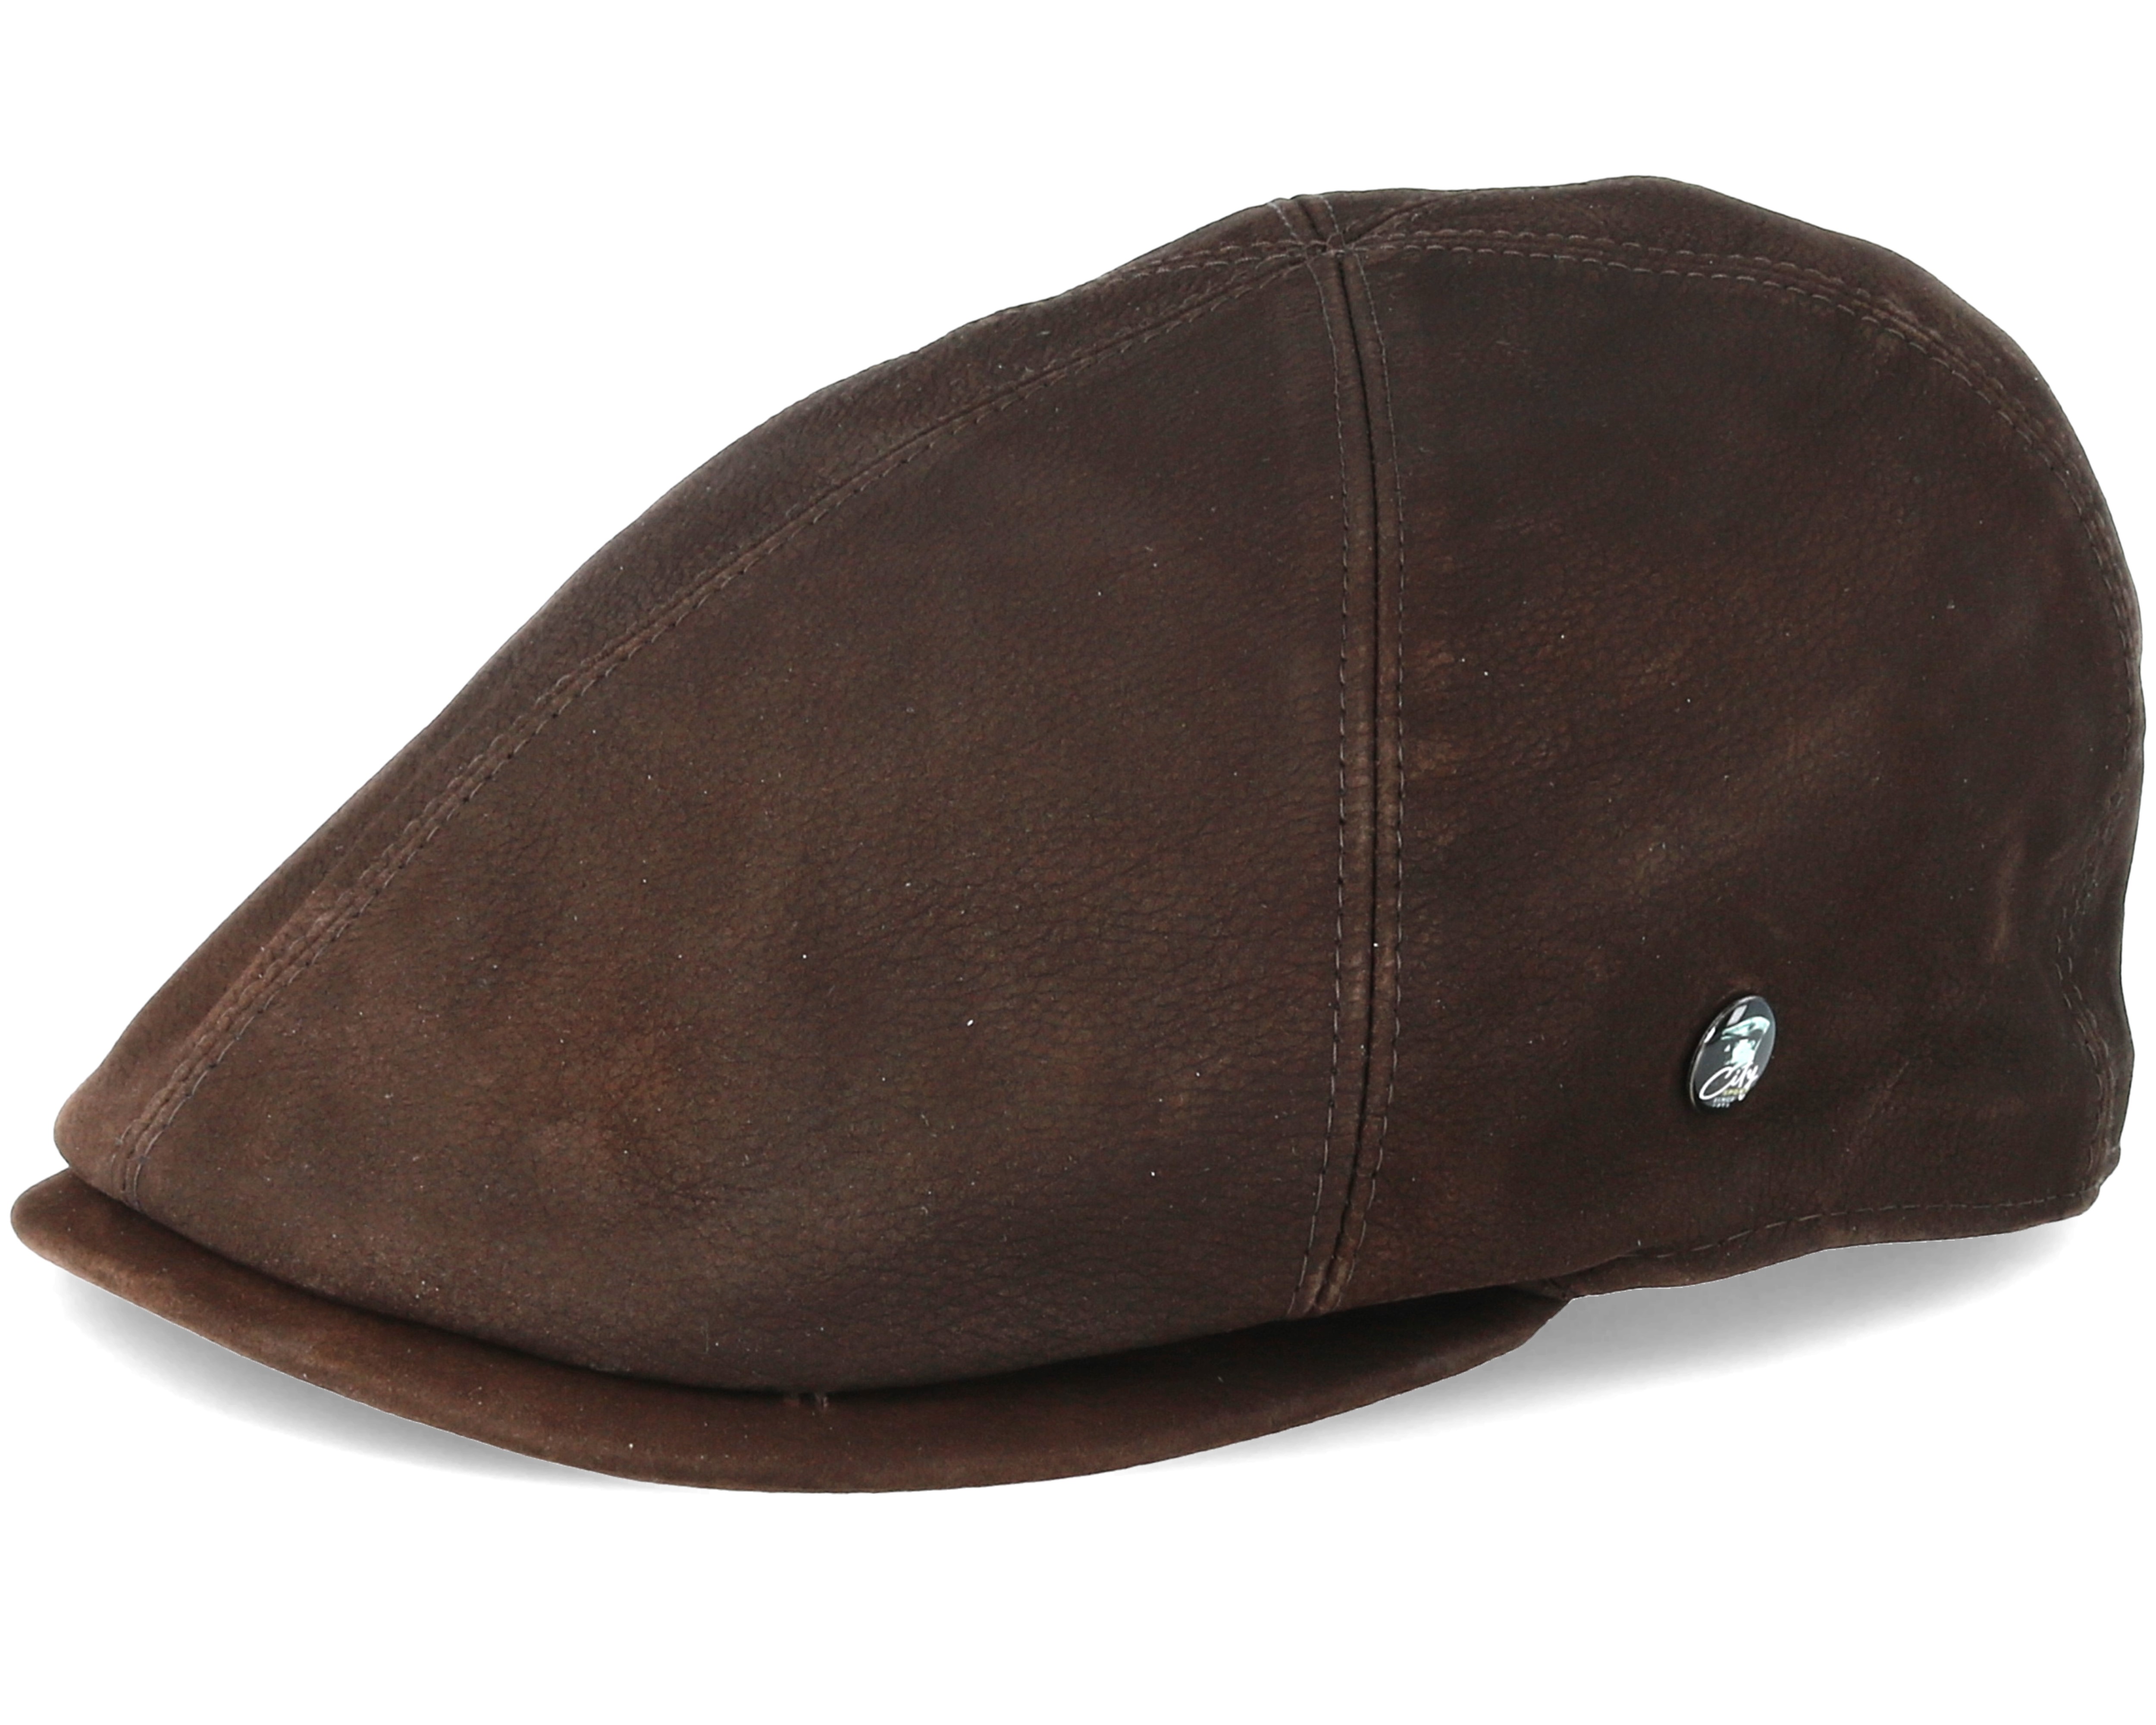 Leather Brown Flat Cap - City Sport caps - Hatstoreworld.com